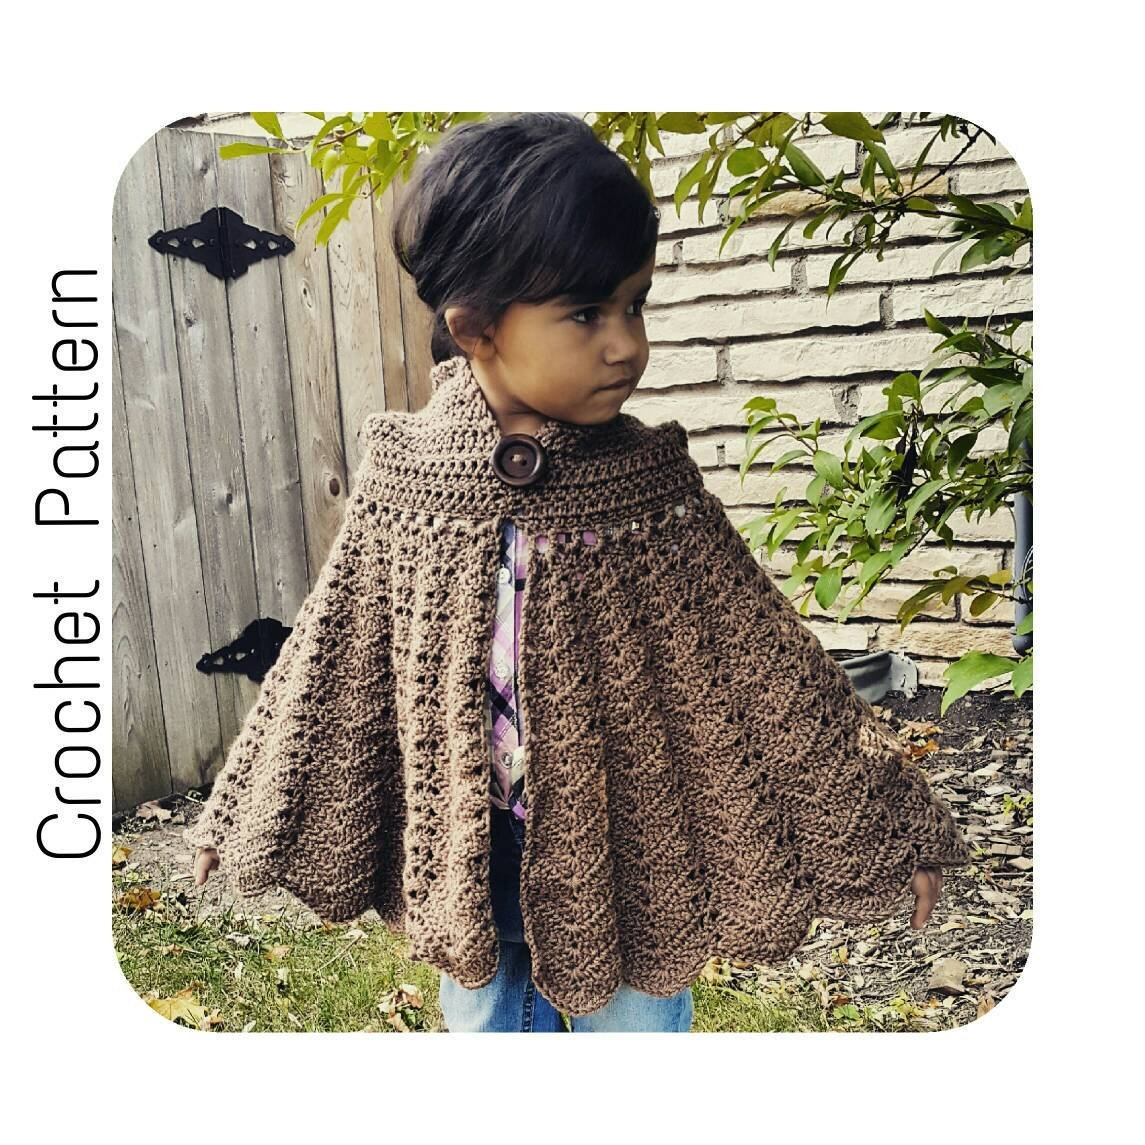 Crochet Cloak With Hood Pattern Capepattern Hashtag On Twitter